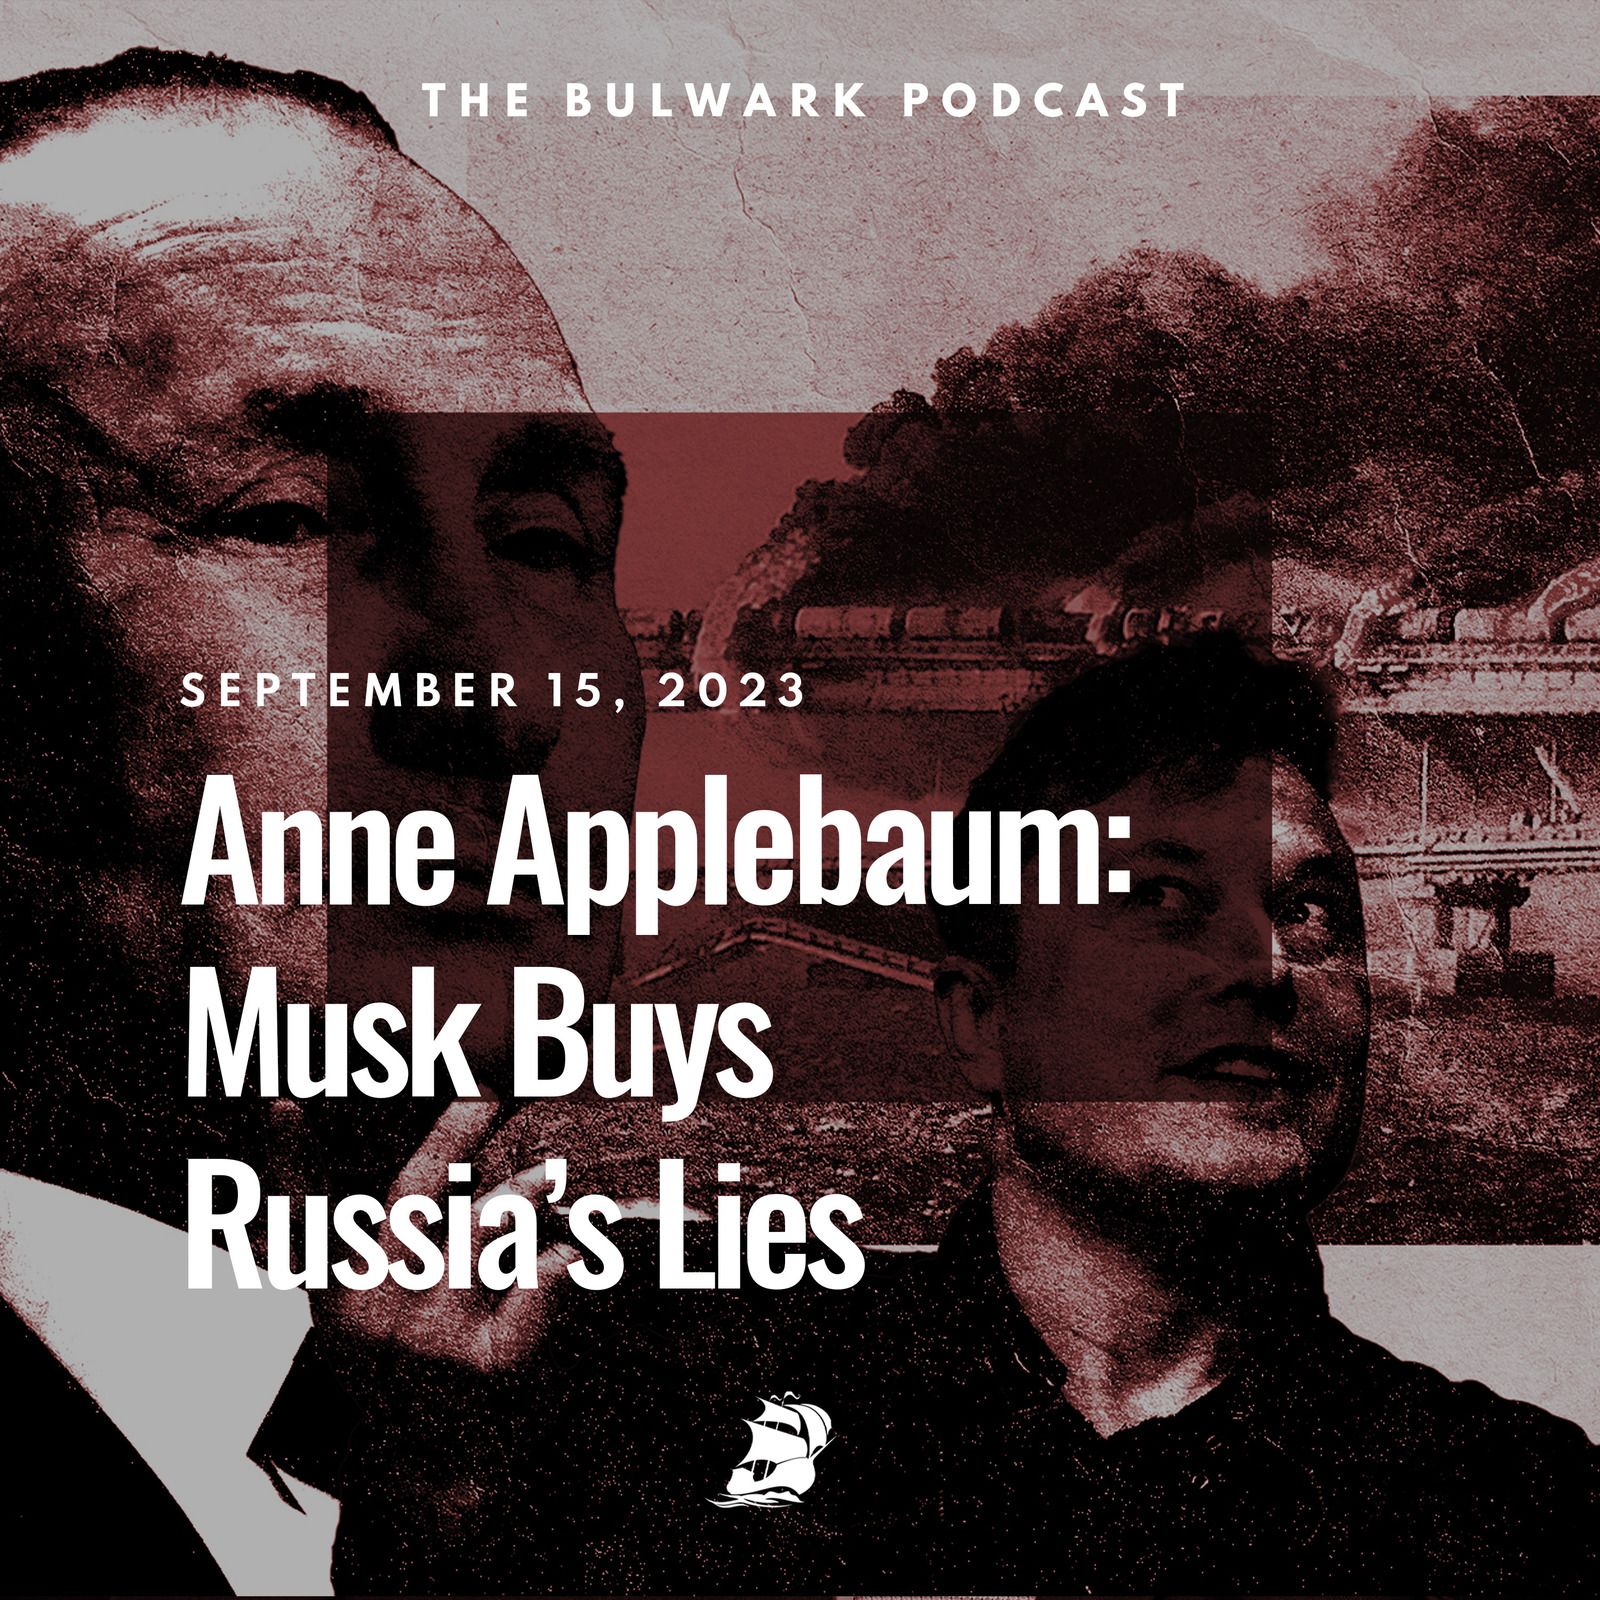 Anne Applebaum: Musk Buys Russia’s Lies